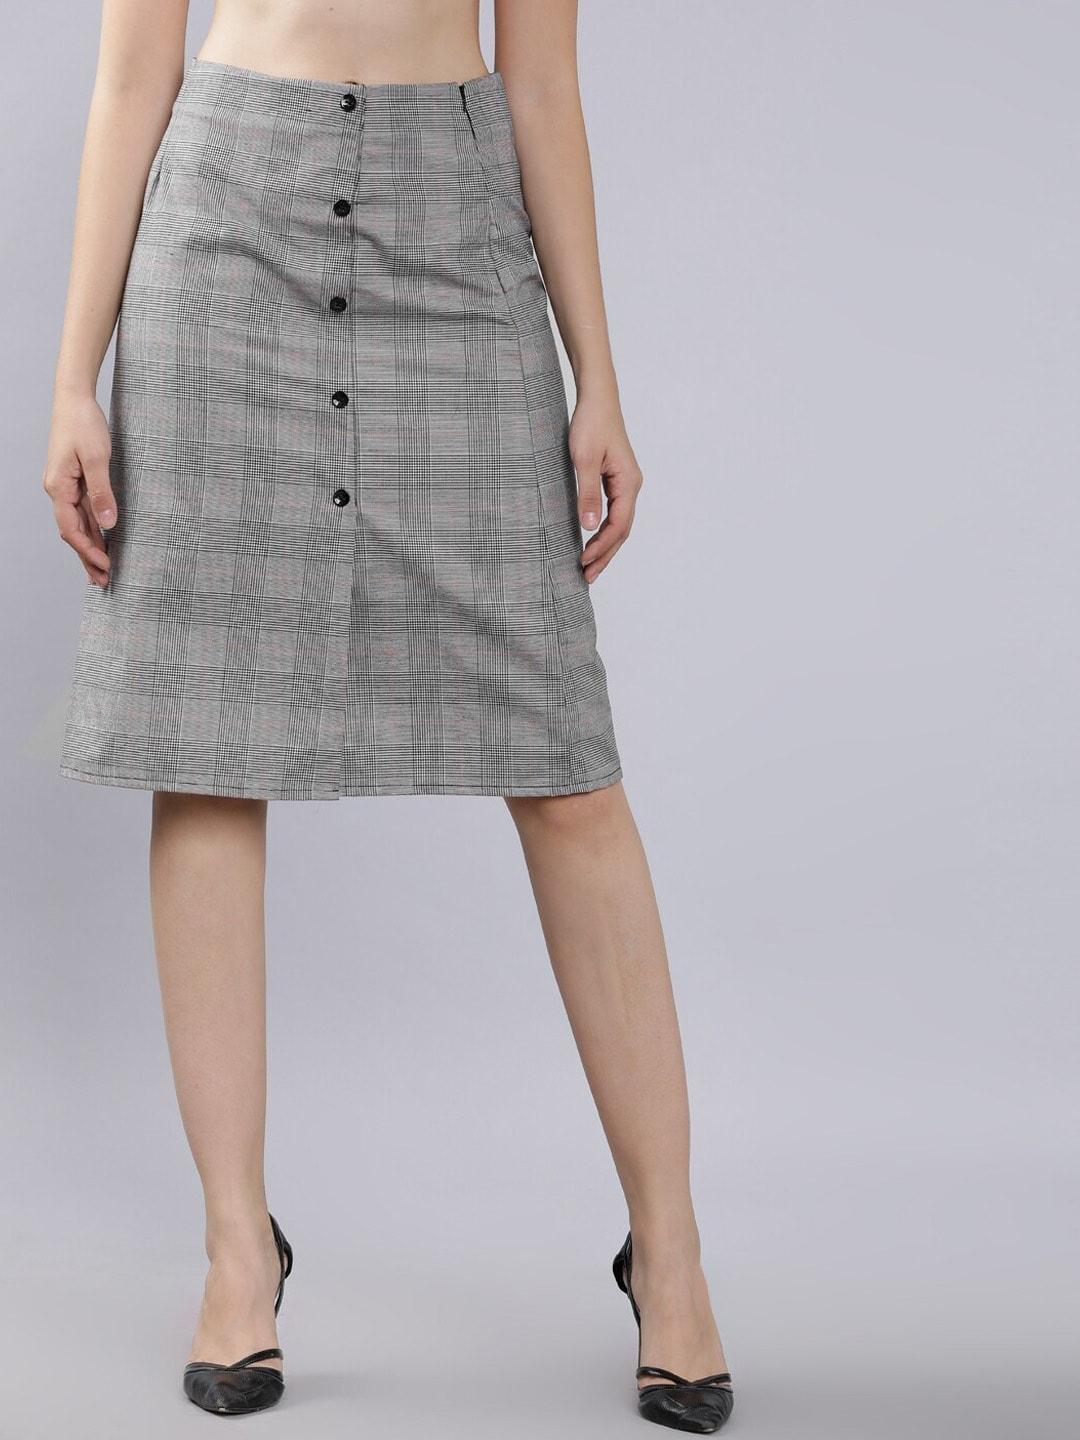 tokyo-talkies-women-grey-checked-a-line-skirt